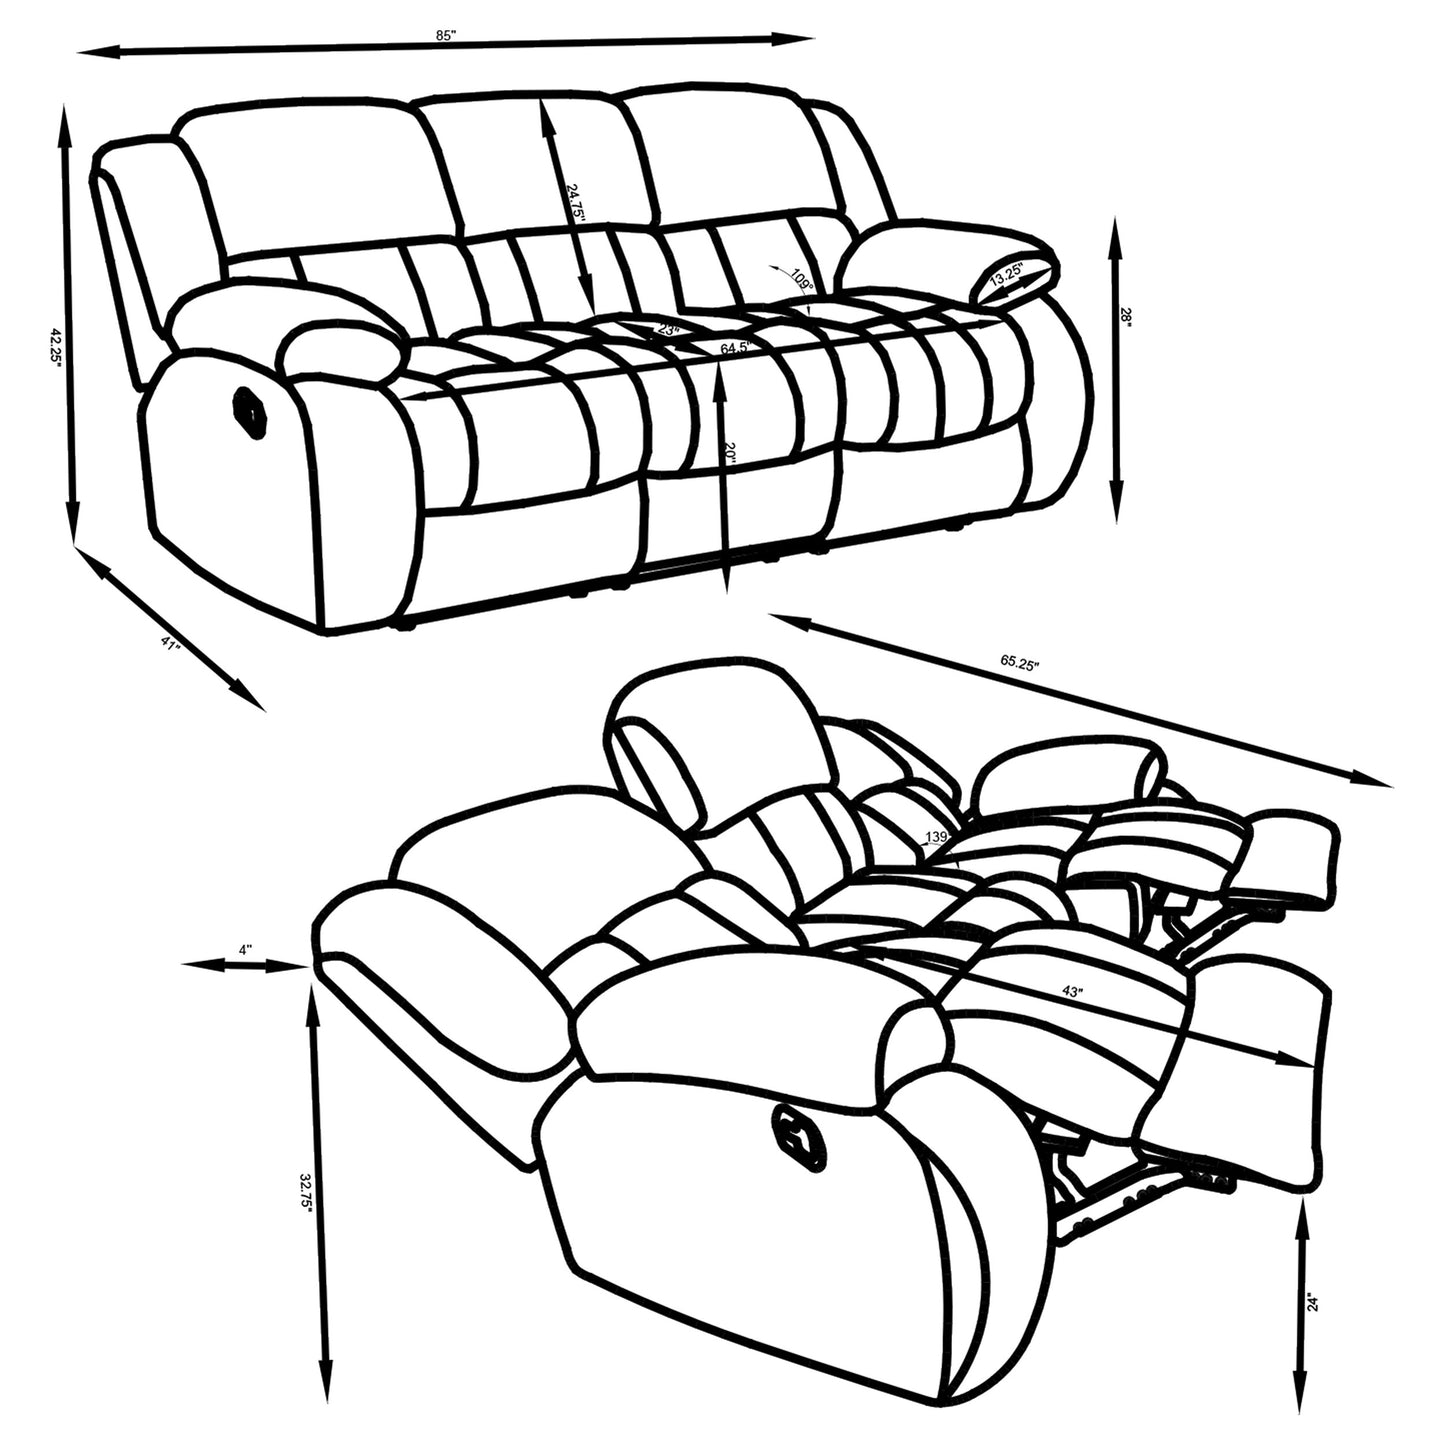 2 pc motion sofa set